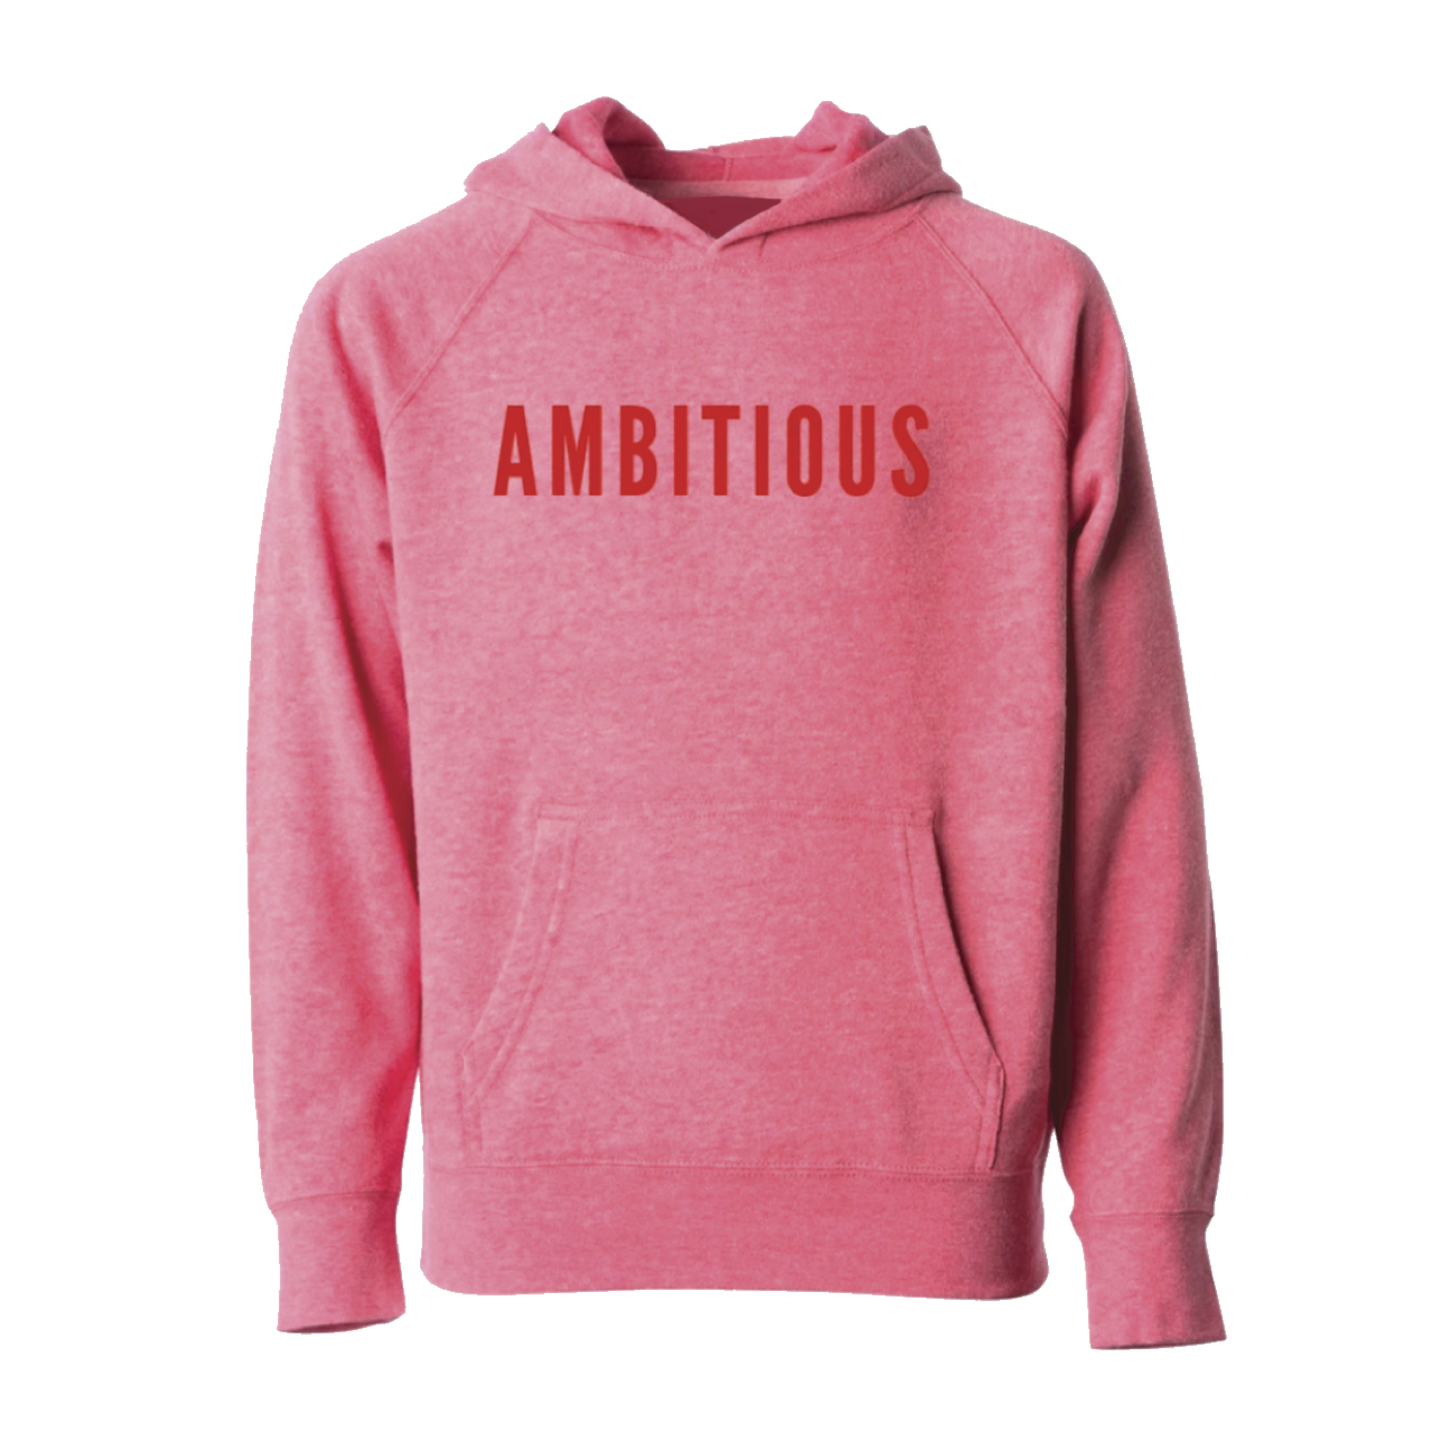 Ambitious Lightweight Hoodie Sweatshirt (Kids)